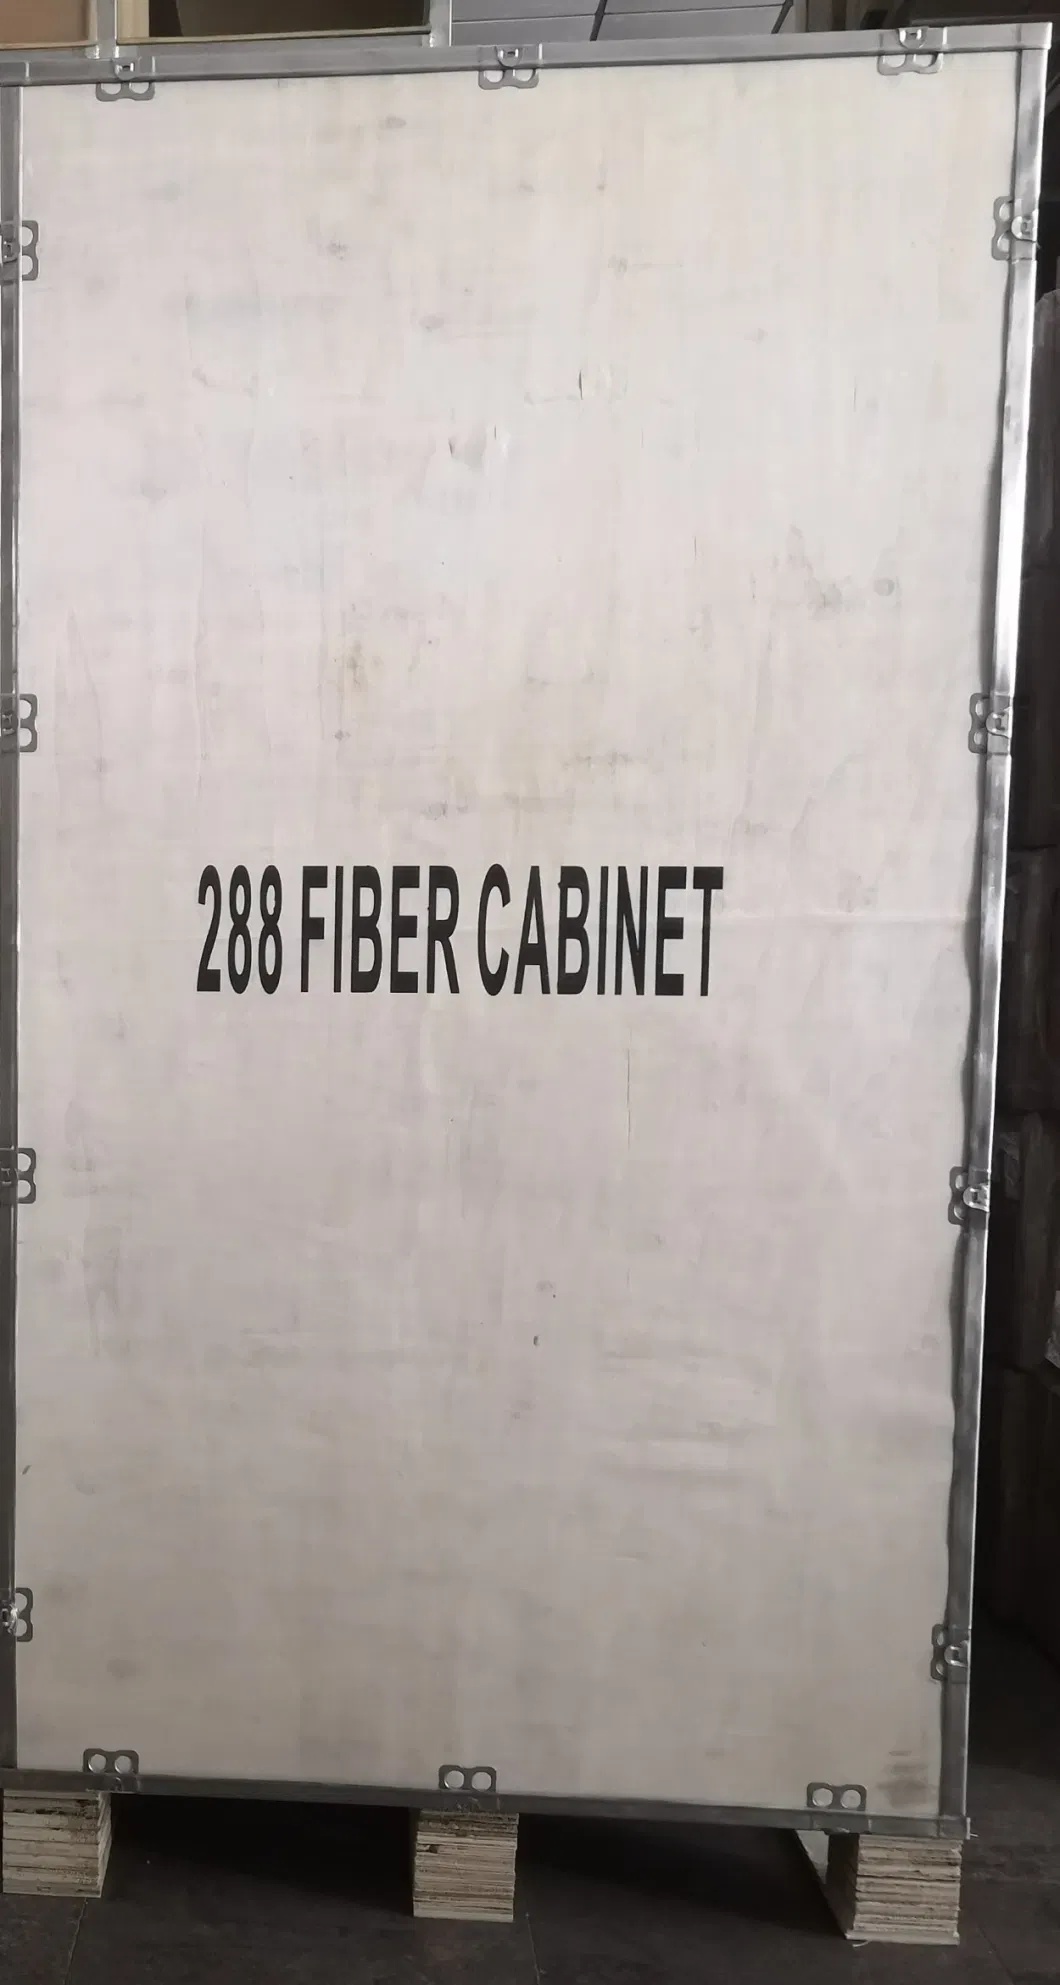 72 96 144 Core Fiber Optic Cable Cross Connect Box Transfer Cabinet for Telecom